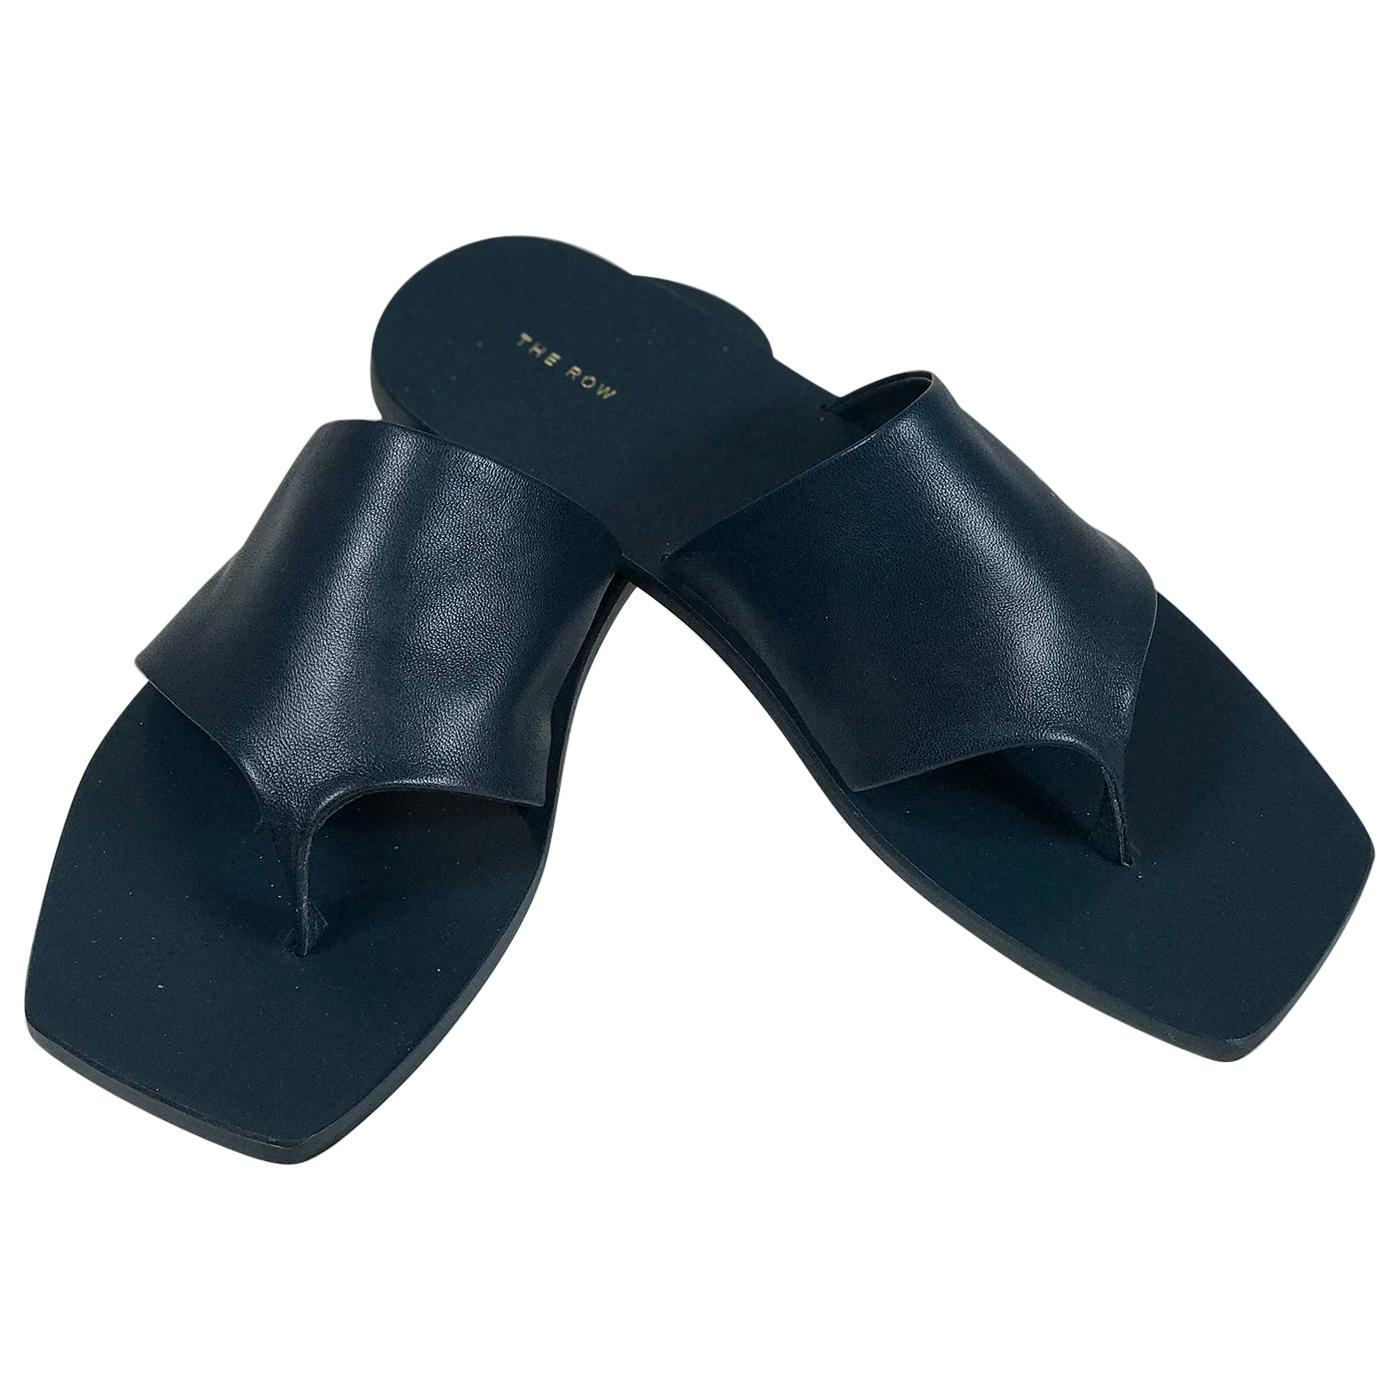 The Row Flip Flop Flat Sandal Teal Glove Nappa Leather 37 Unworn